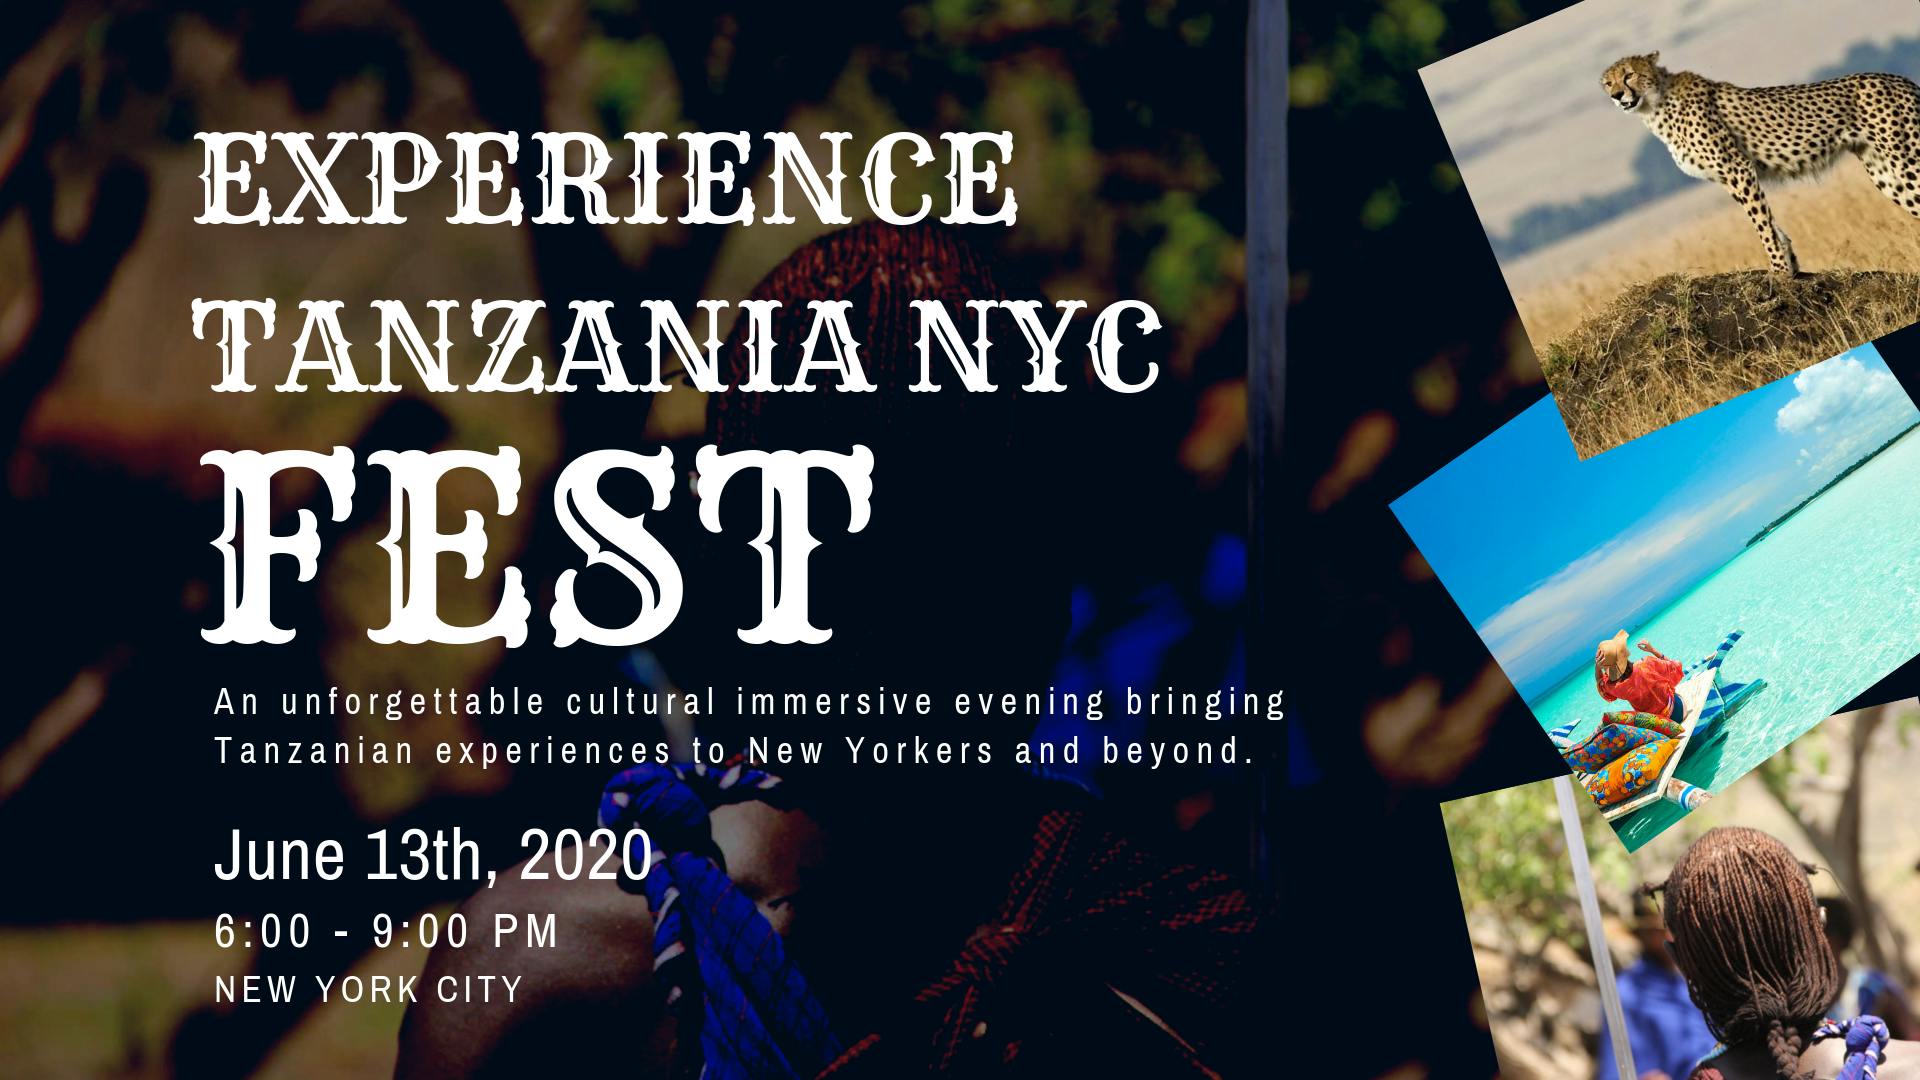 Experience Tanzania NYC Fest 2020